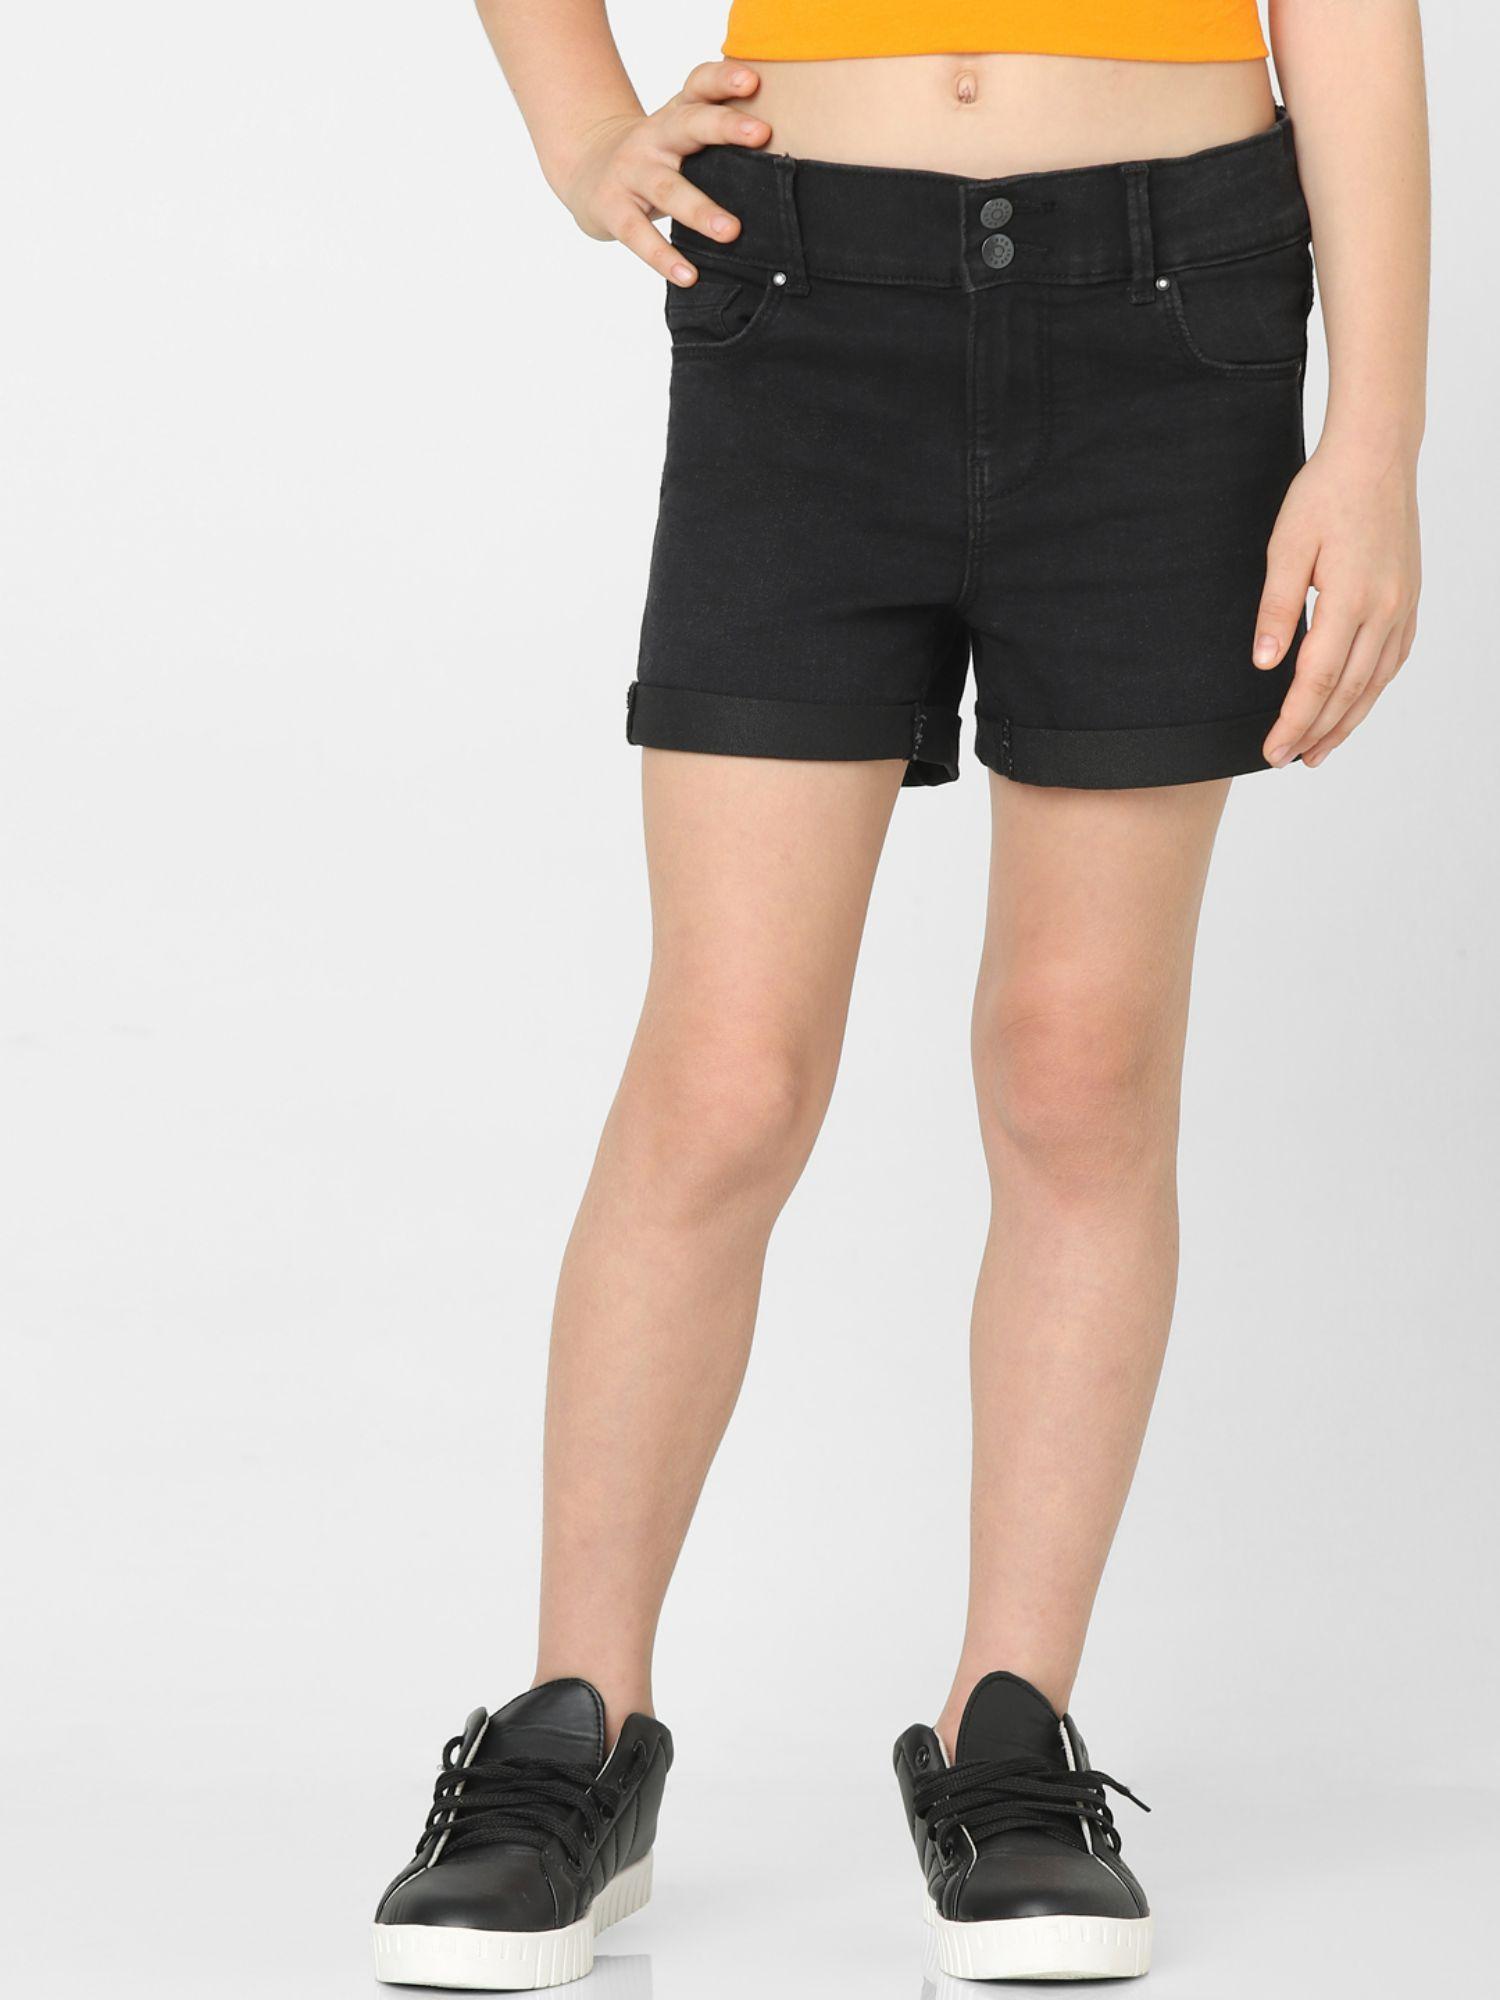 girls solid black shorts